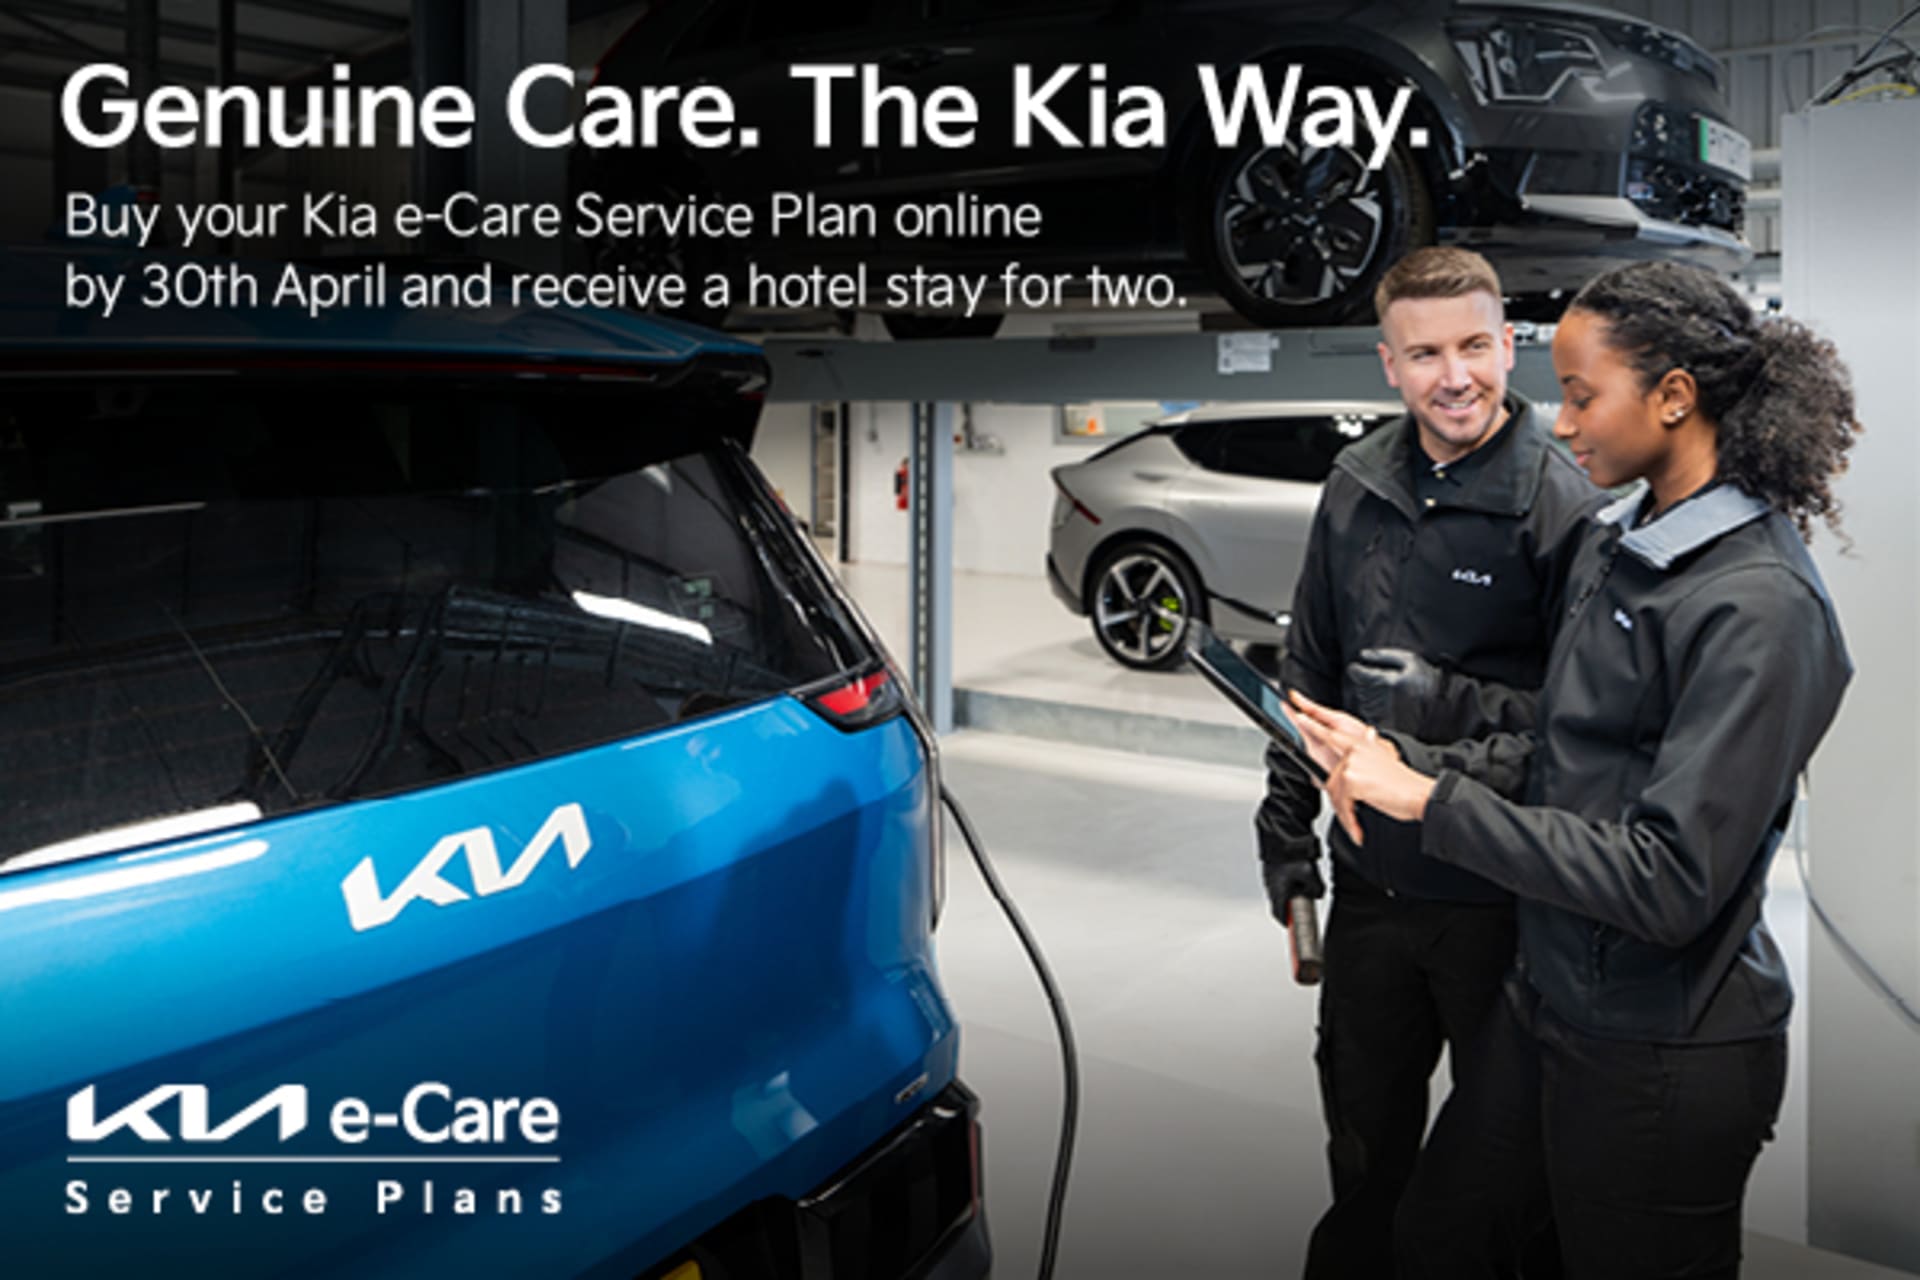 Kia e-Care Service Plan